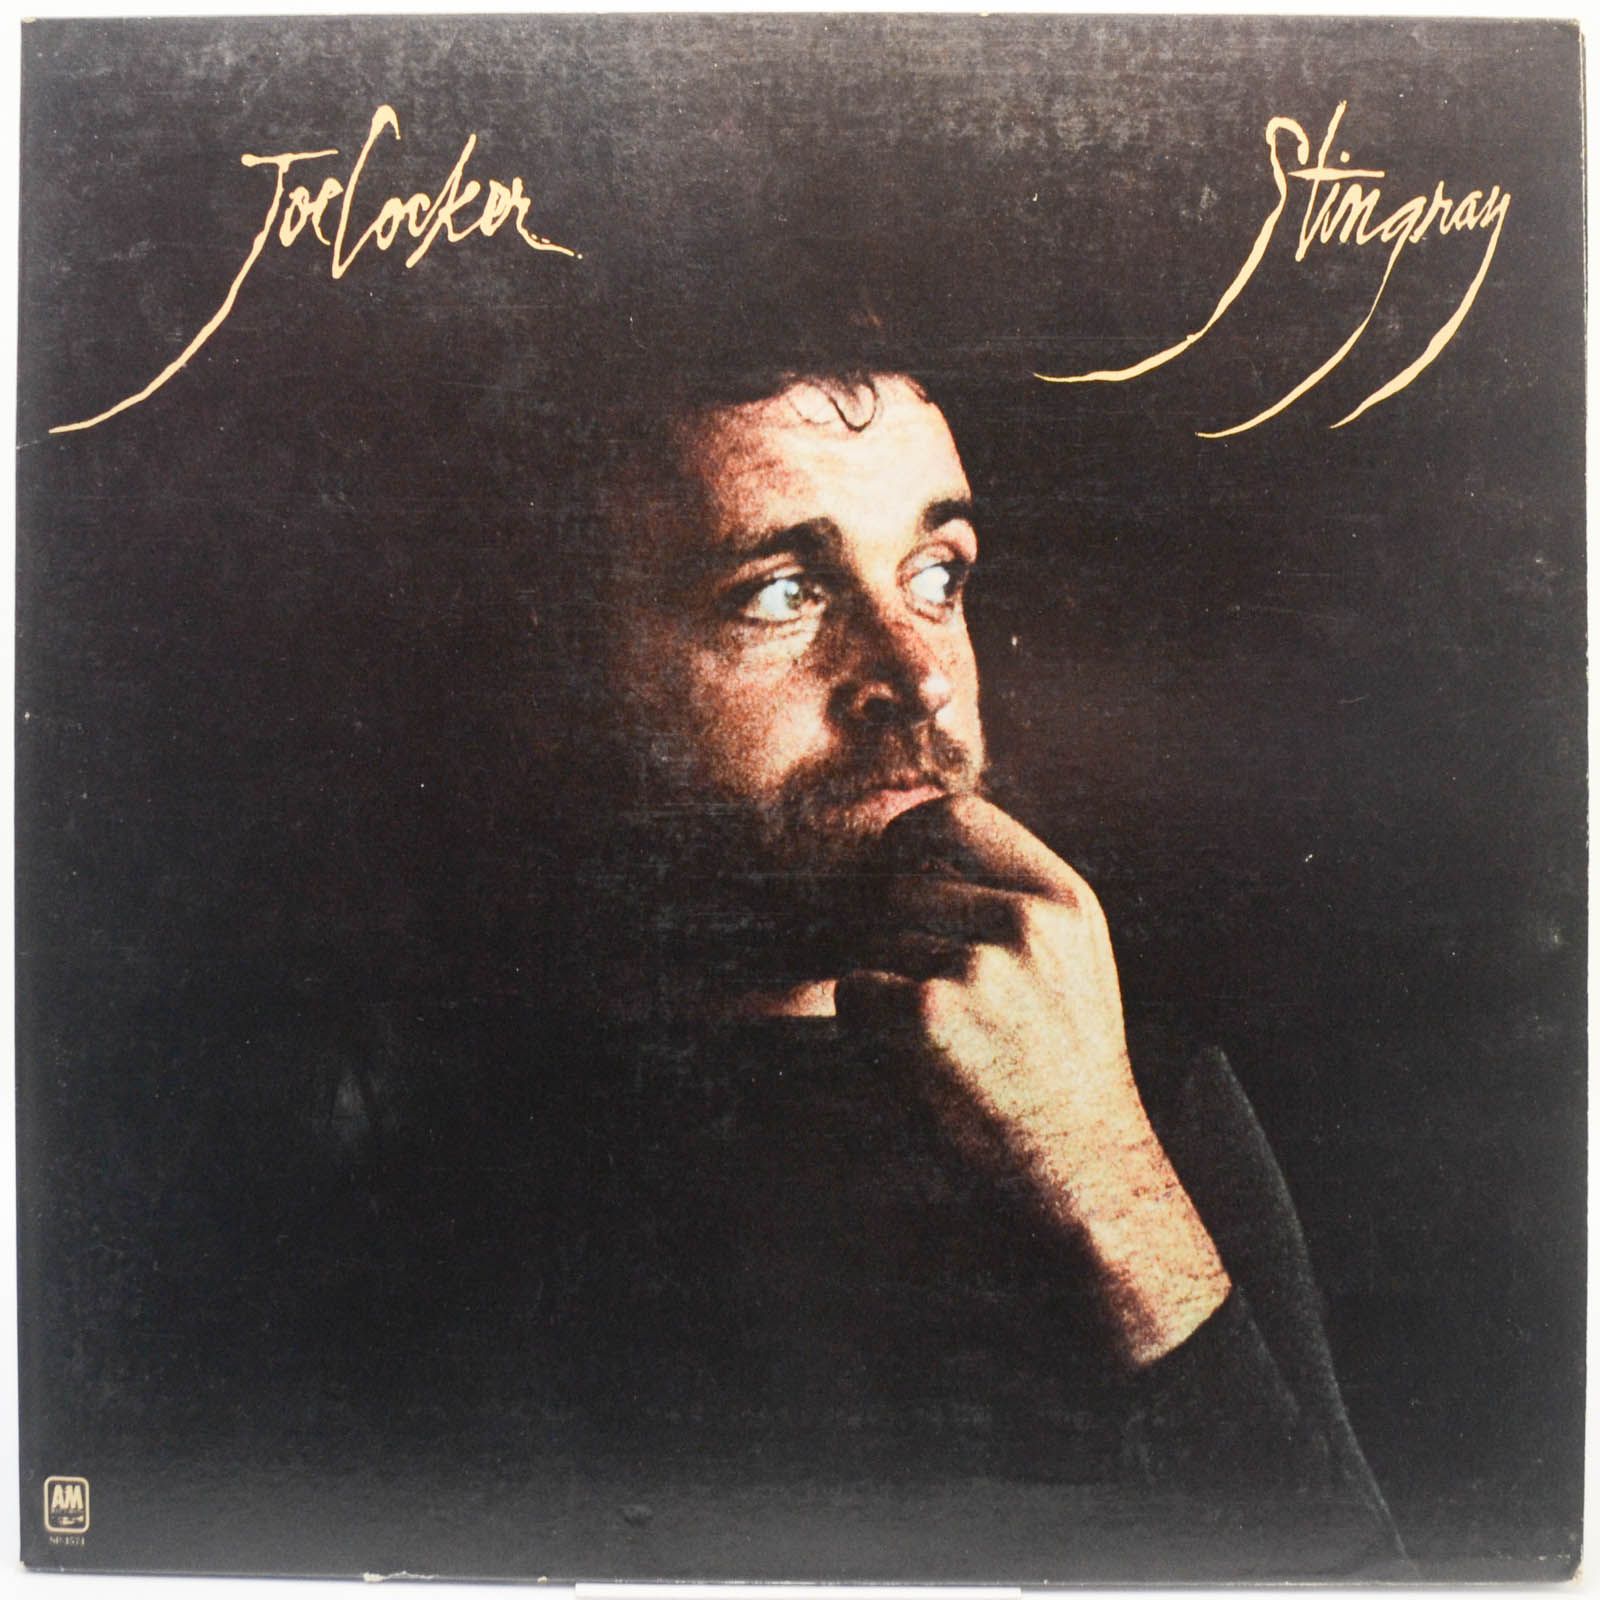 Joe Cocker — Stingray (USA), 1976